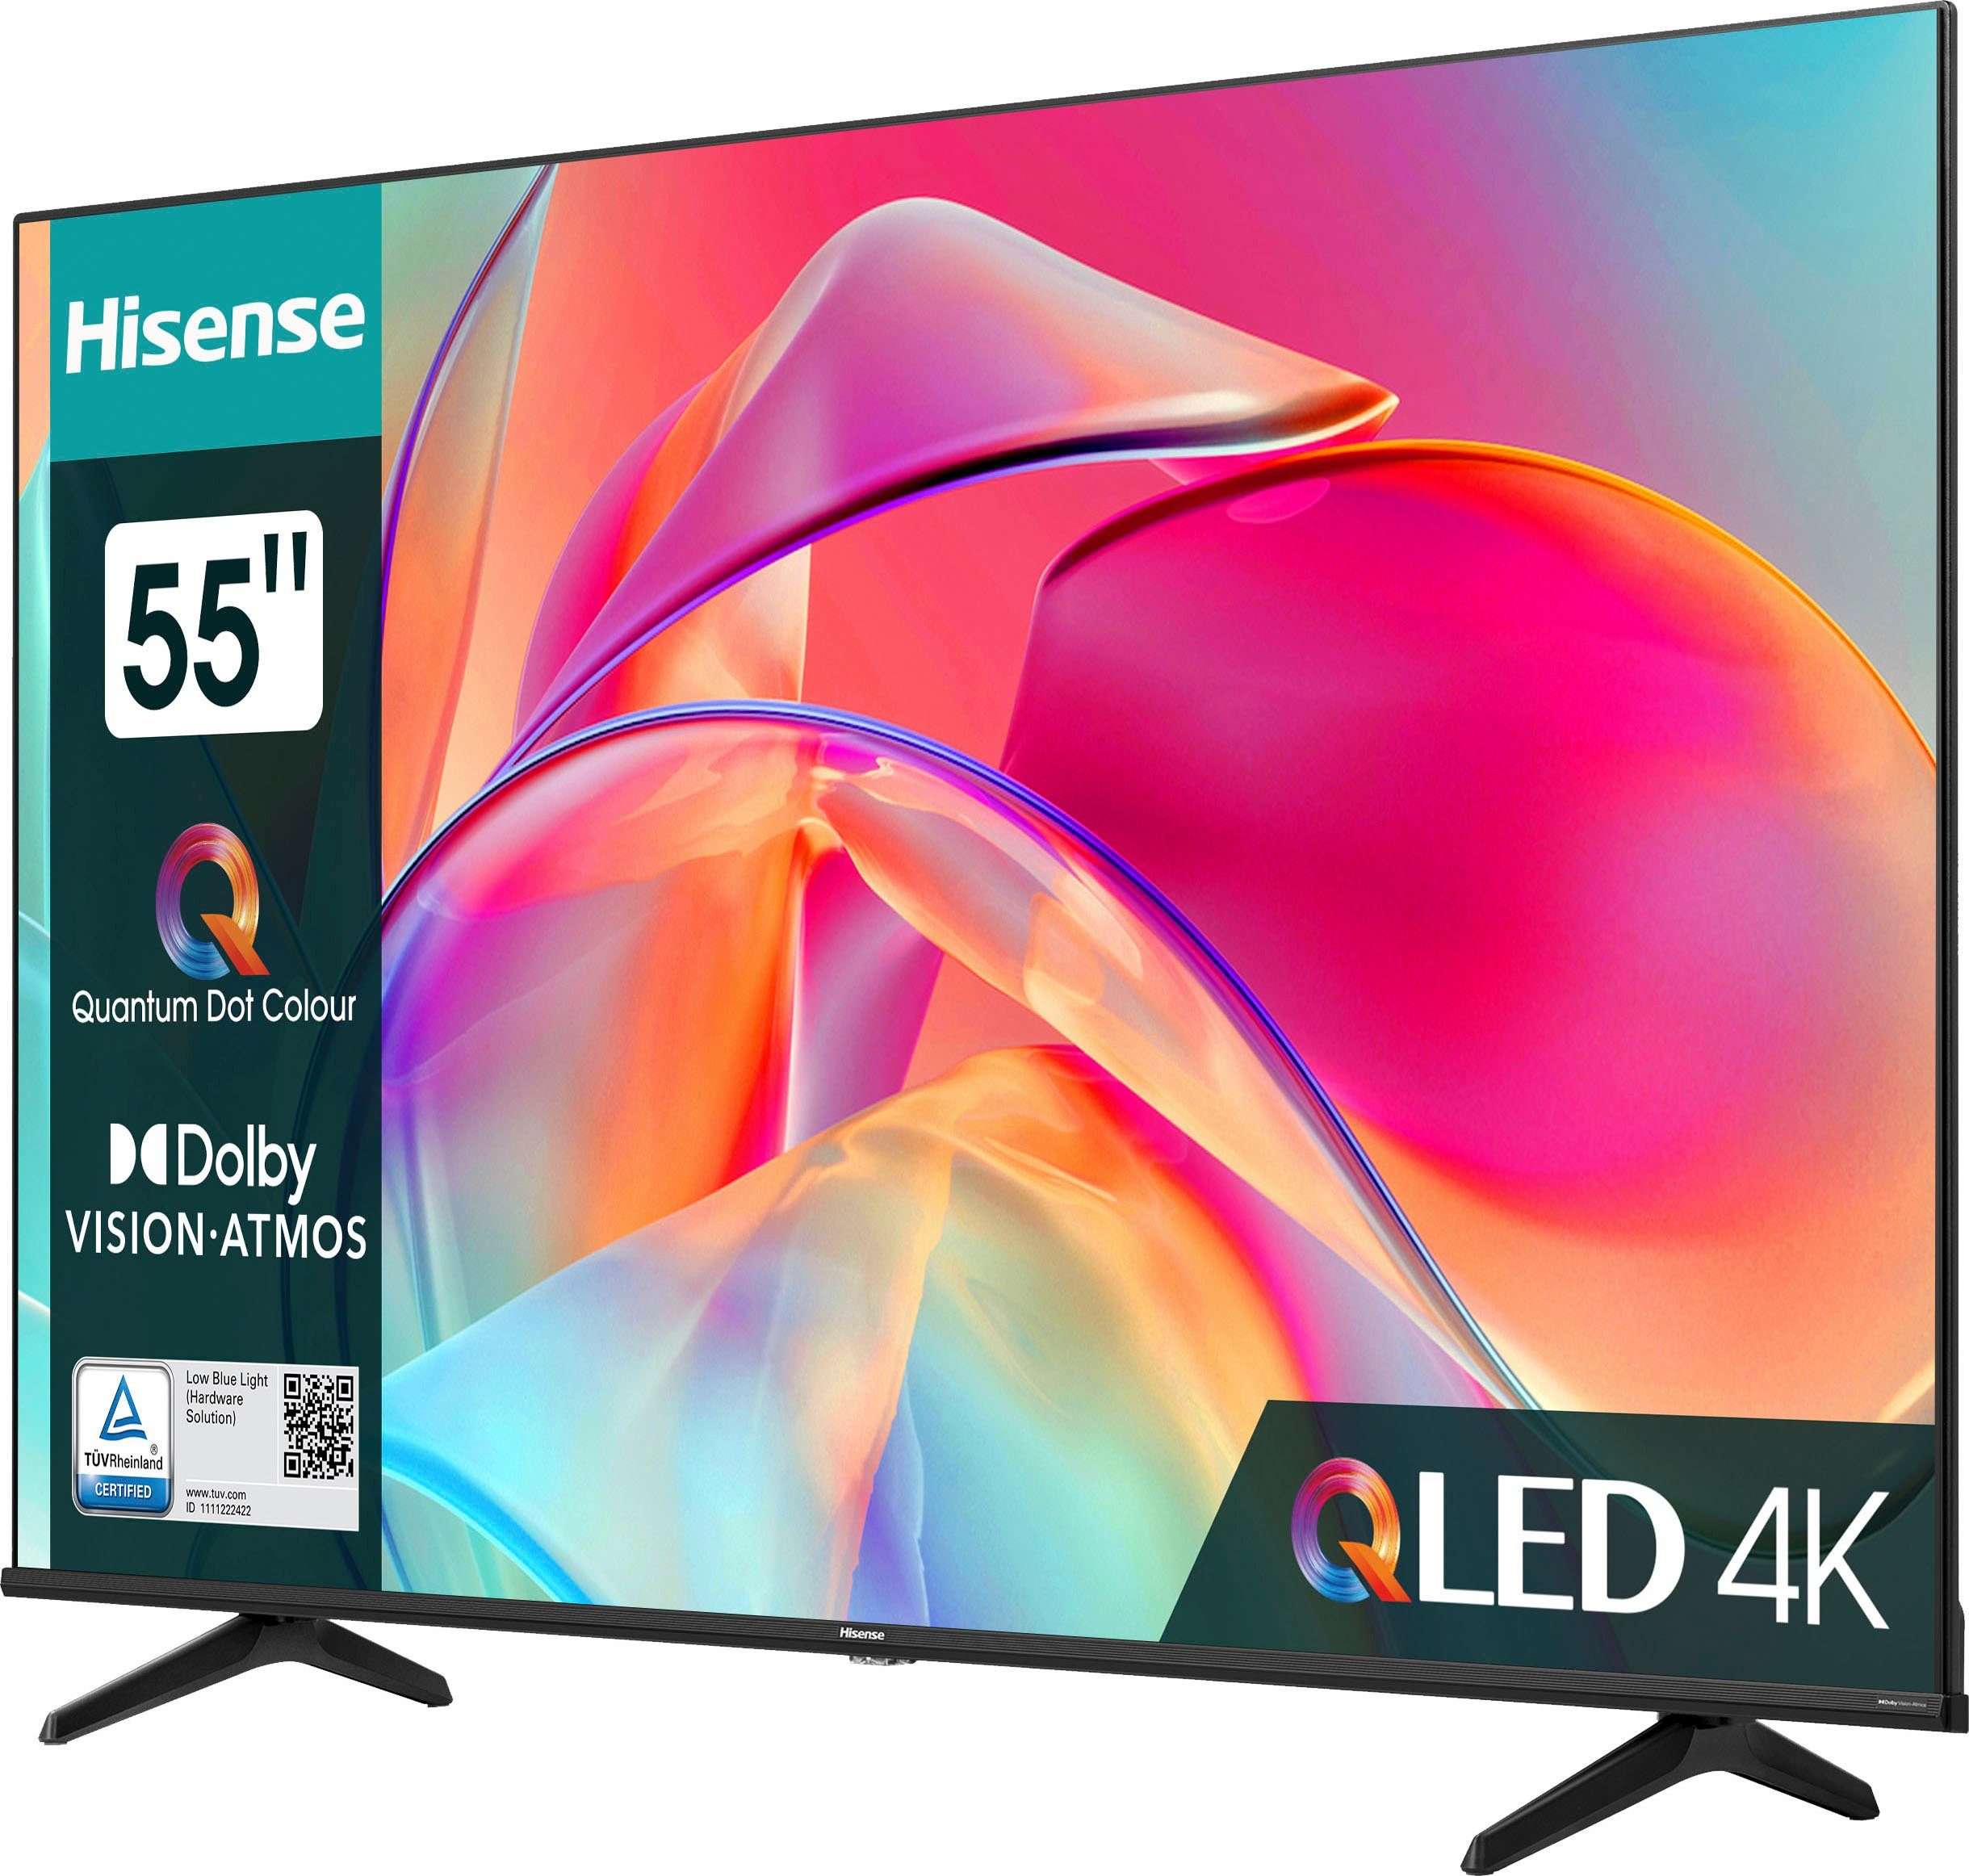 Hisense 55E77KQ QLED-Fernseher (139 Zoll, HD, cm/55 Smart-TV) 4K Ultra